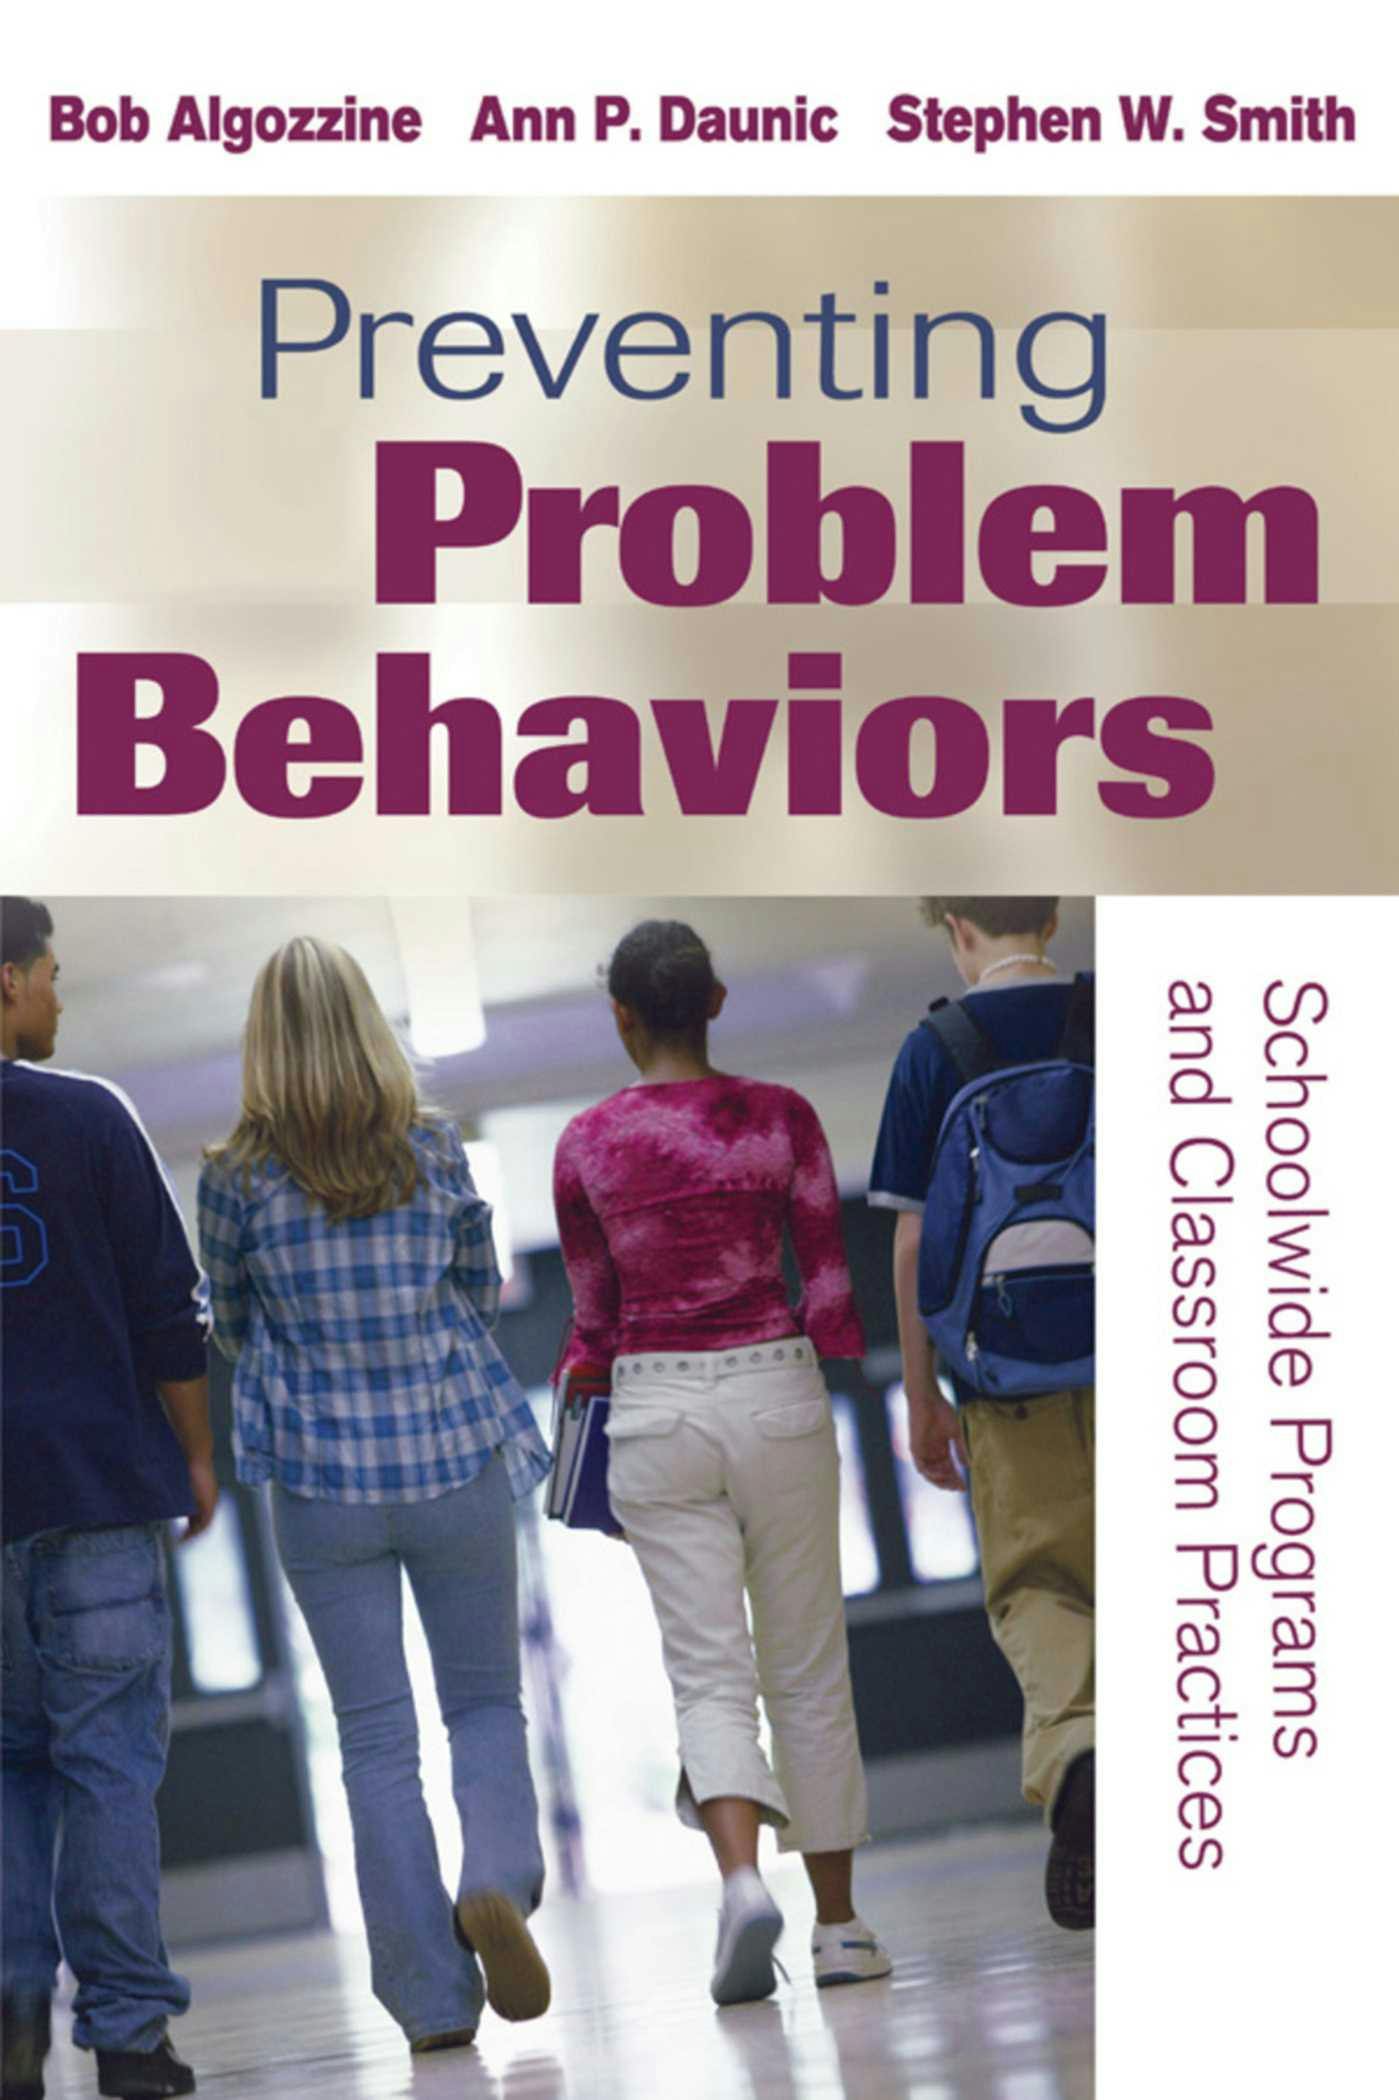 Preventing Problem Behaviors: Schoolwide Programs and Classroom Practices - Stephen W. Smith, Bob Algozzine, Ann P. Daunic